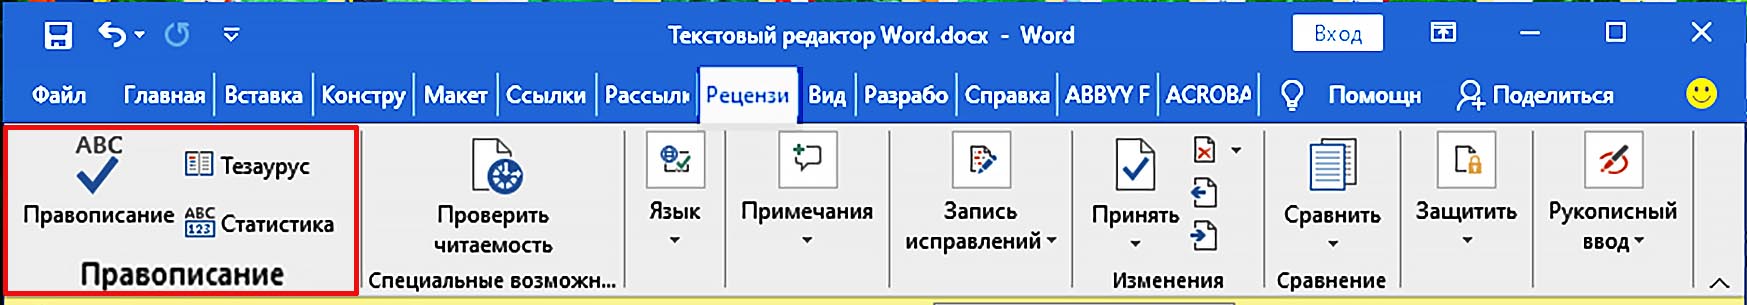  tekstovyj-redaktor-word-instrukciya_12.jpg 